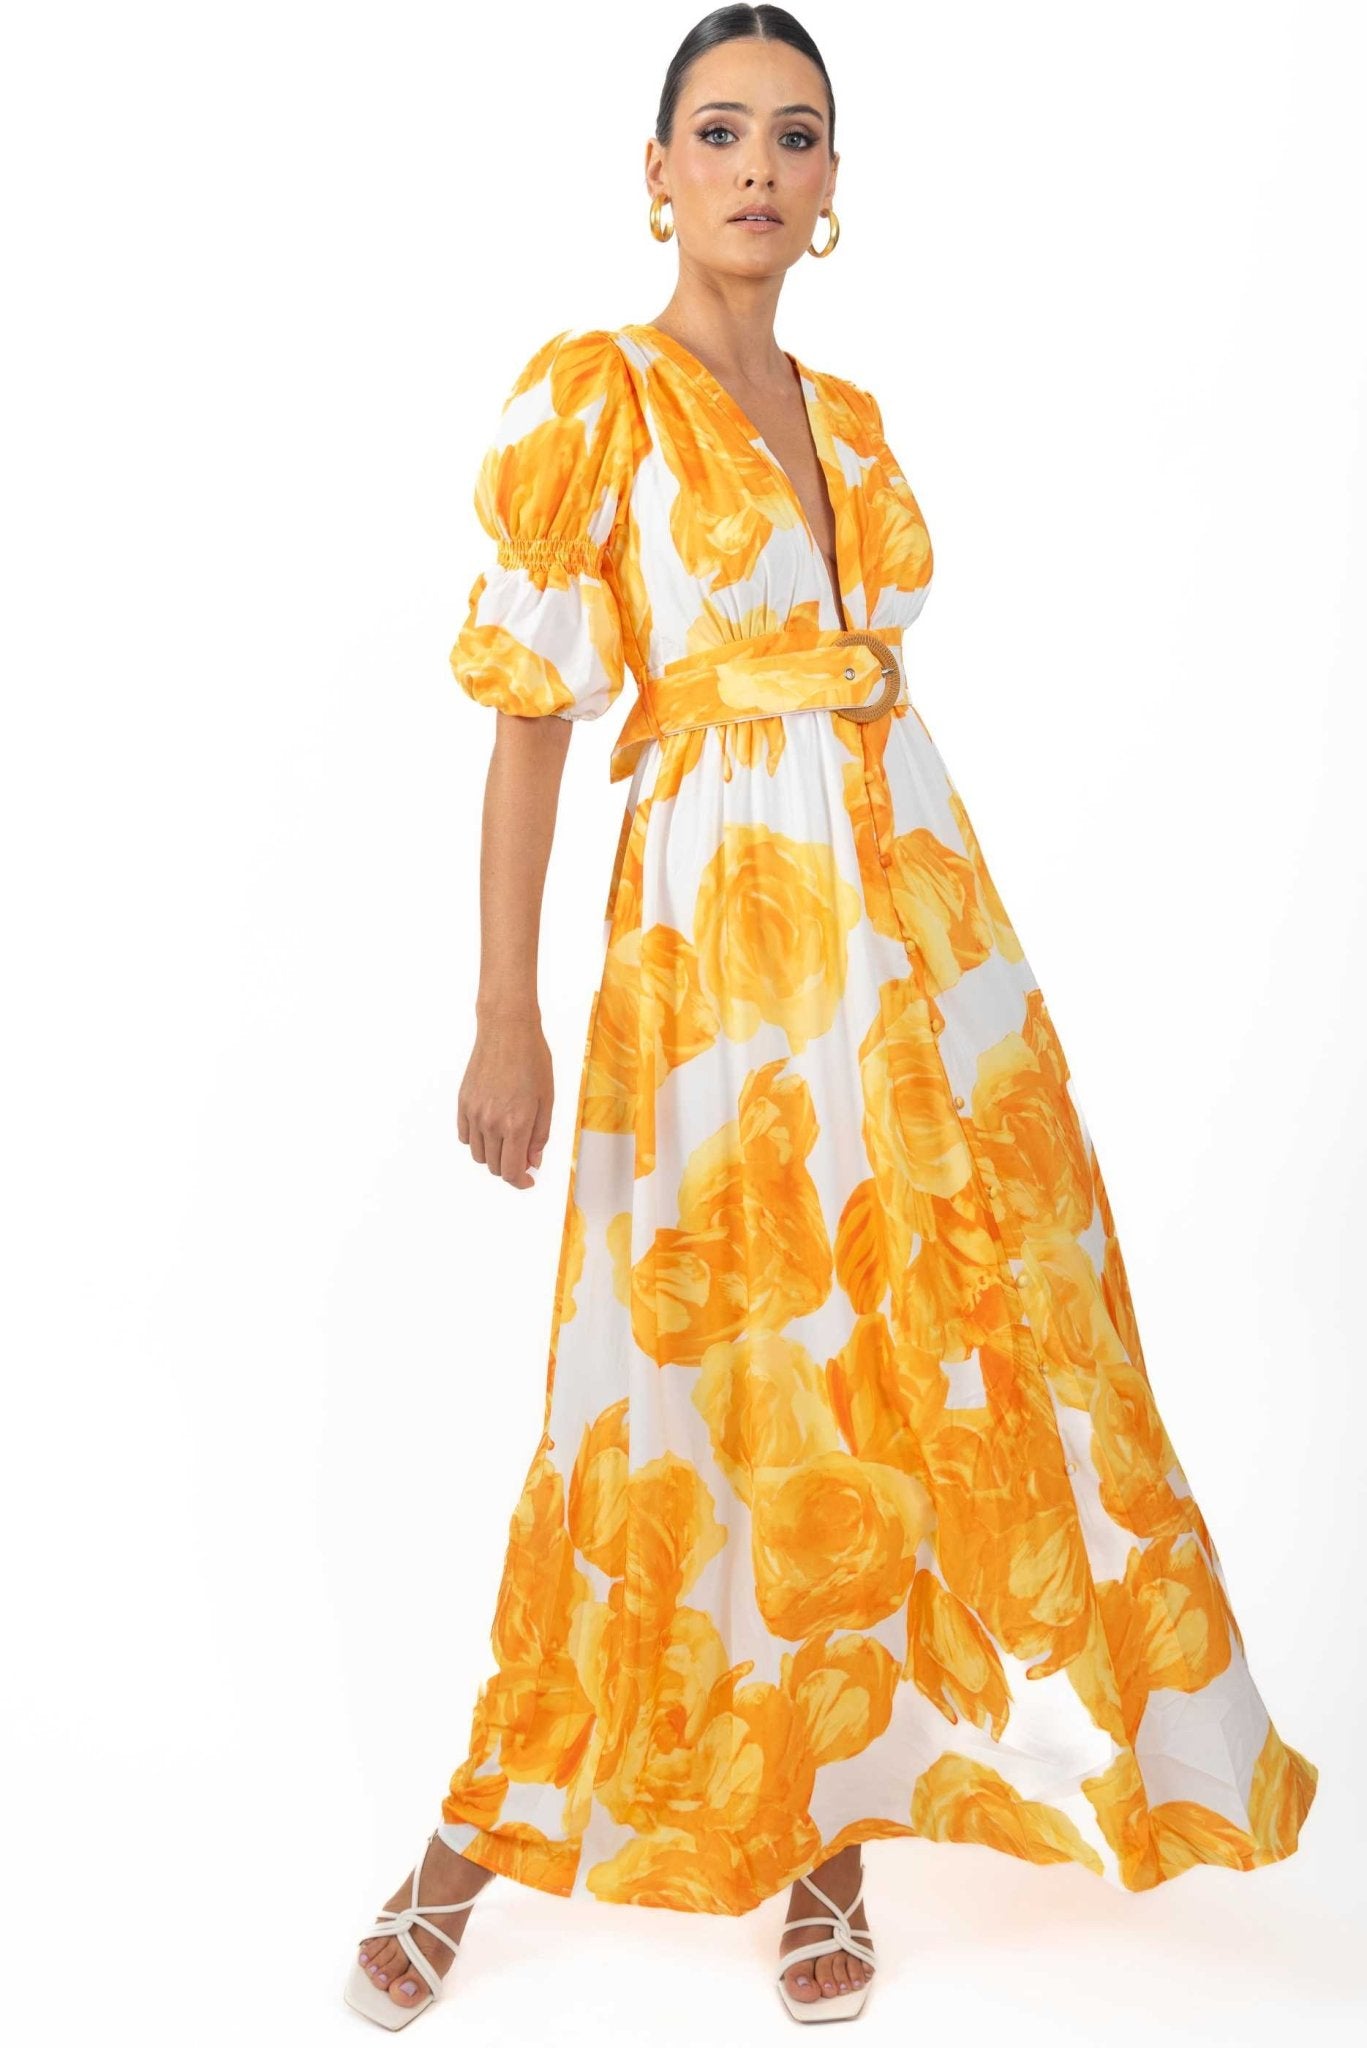 Verona Maxi Women's Floral Dress Yellow - Akalia